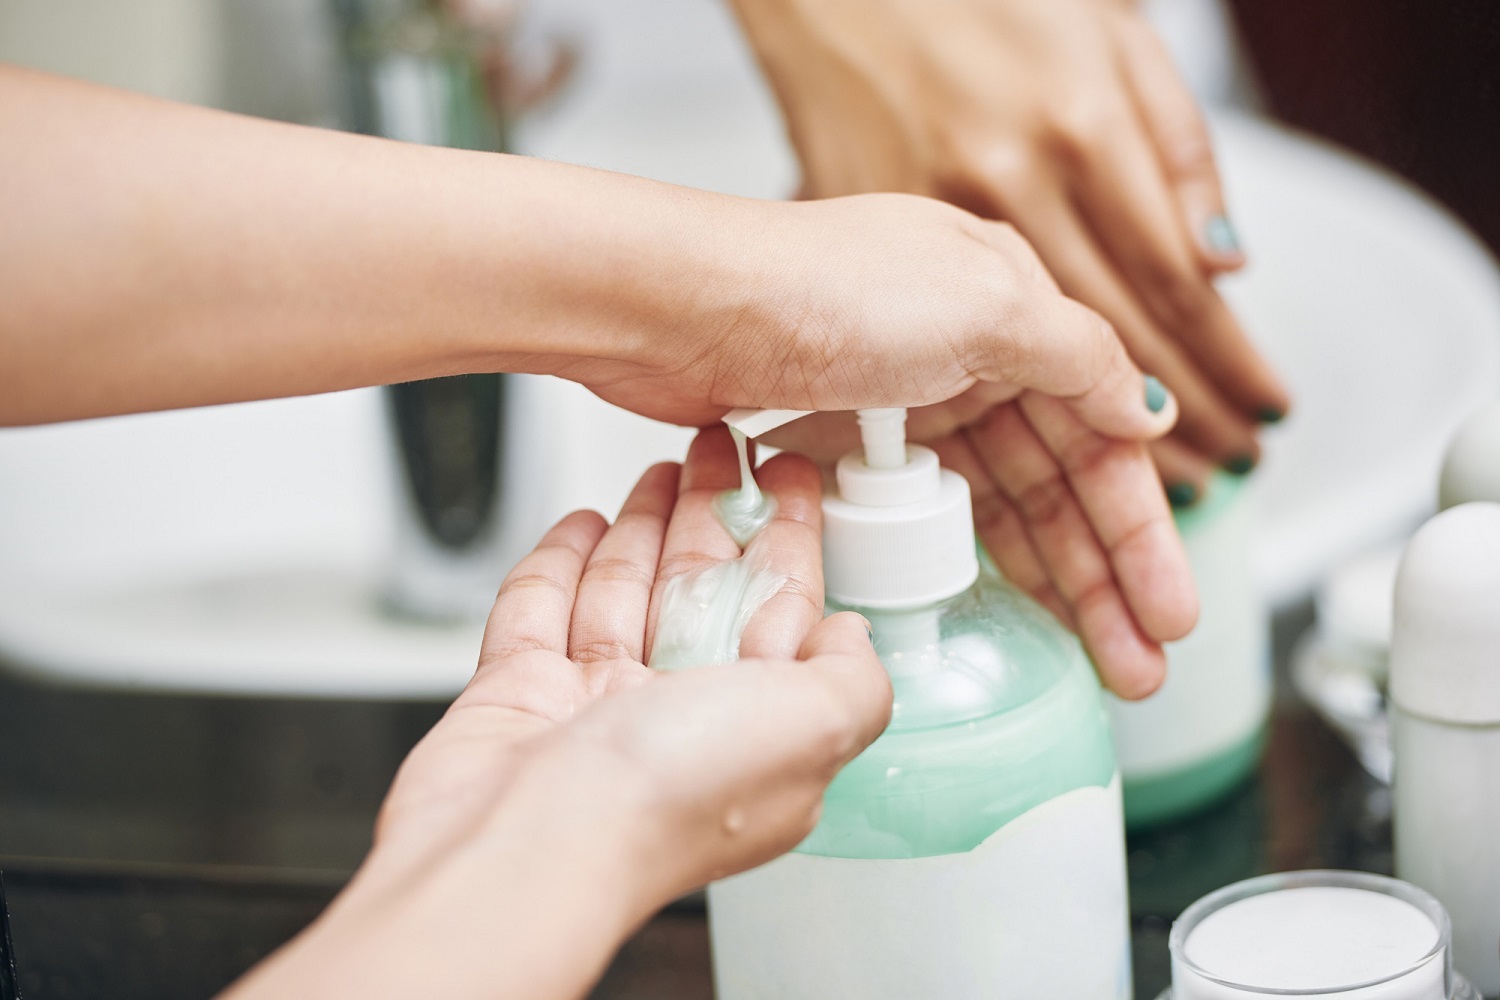 benefits of hand sanitizer